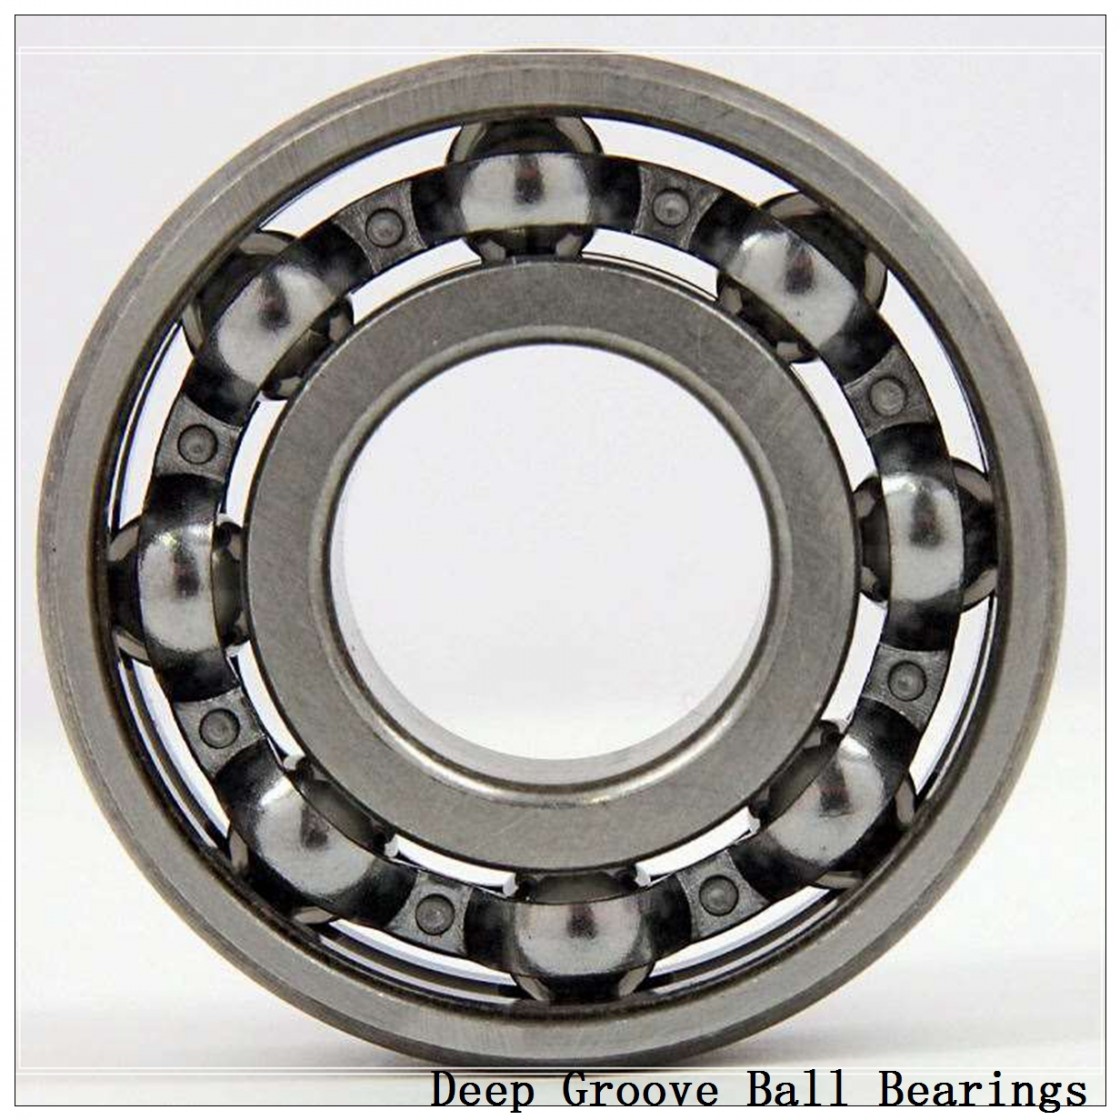 61844MA Deep groove ball bearings